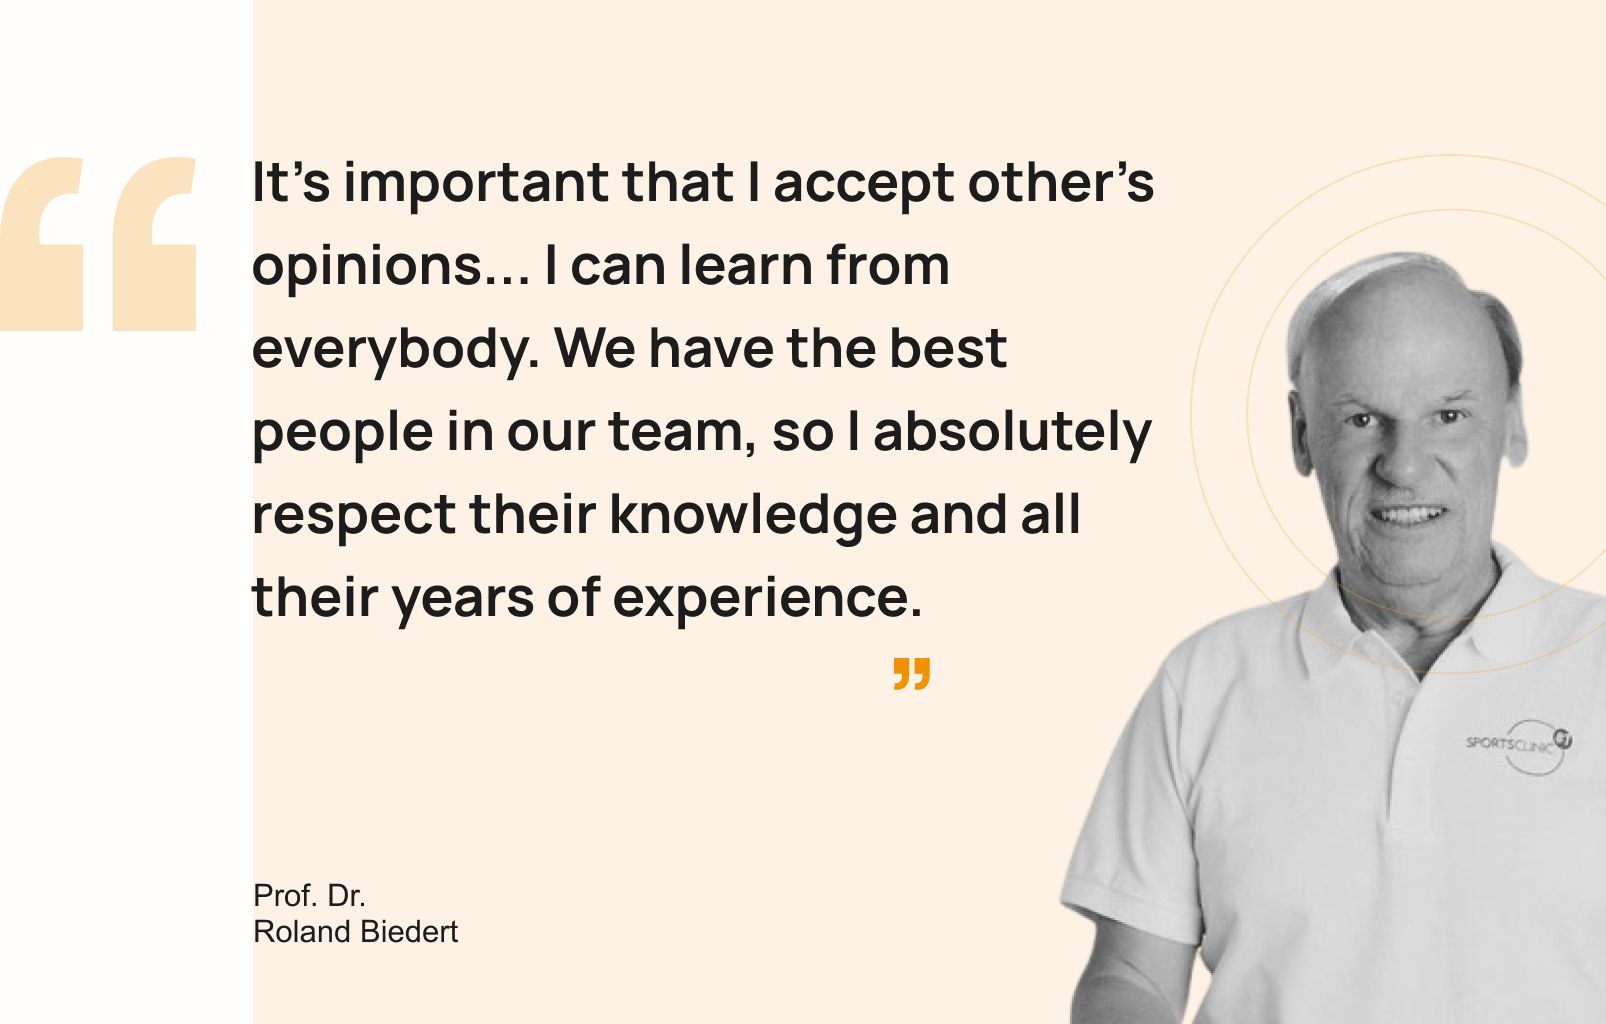 Prof. Dr. Roland Biedert, Roger Federer's personal orthopaedic surgeon.